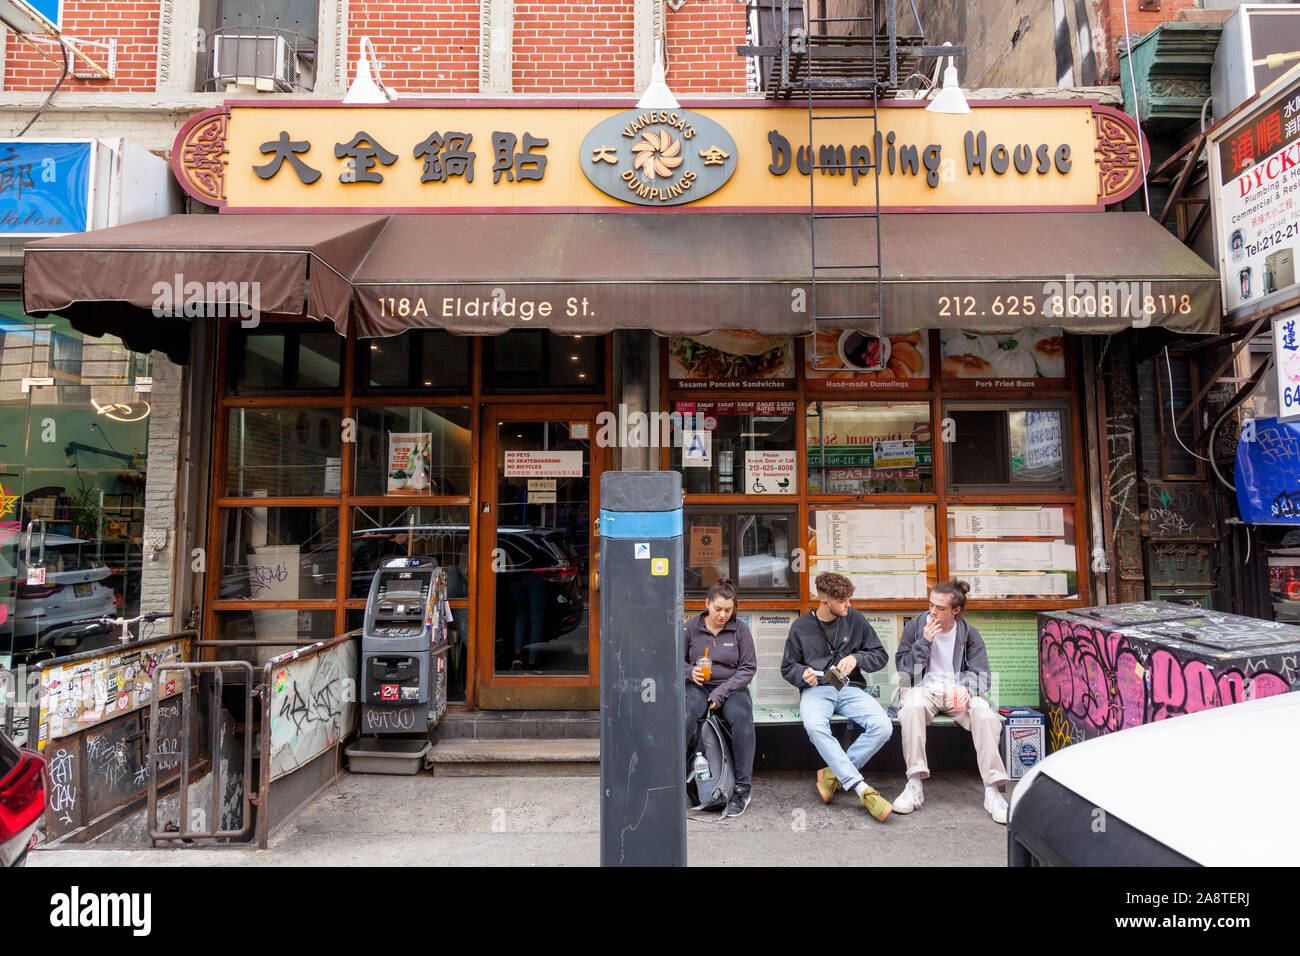 Vanessa's Dumplings House 118 Eldridge St, New York City, NY , United States of America. Stock Photo